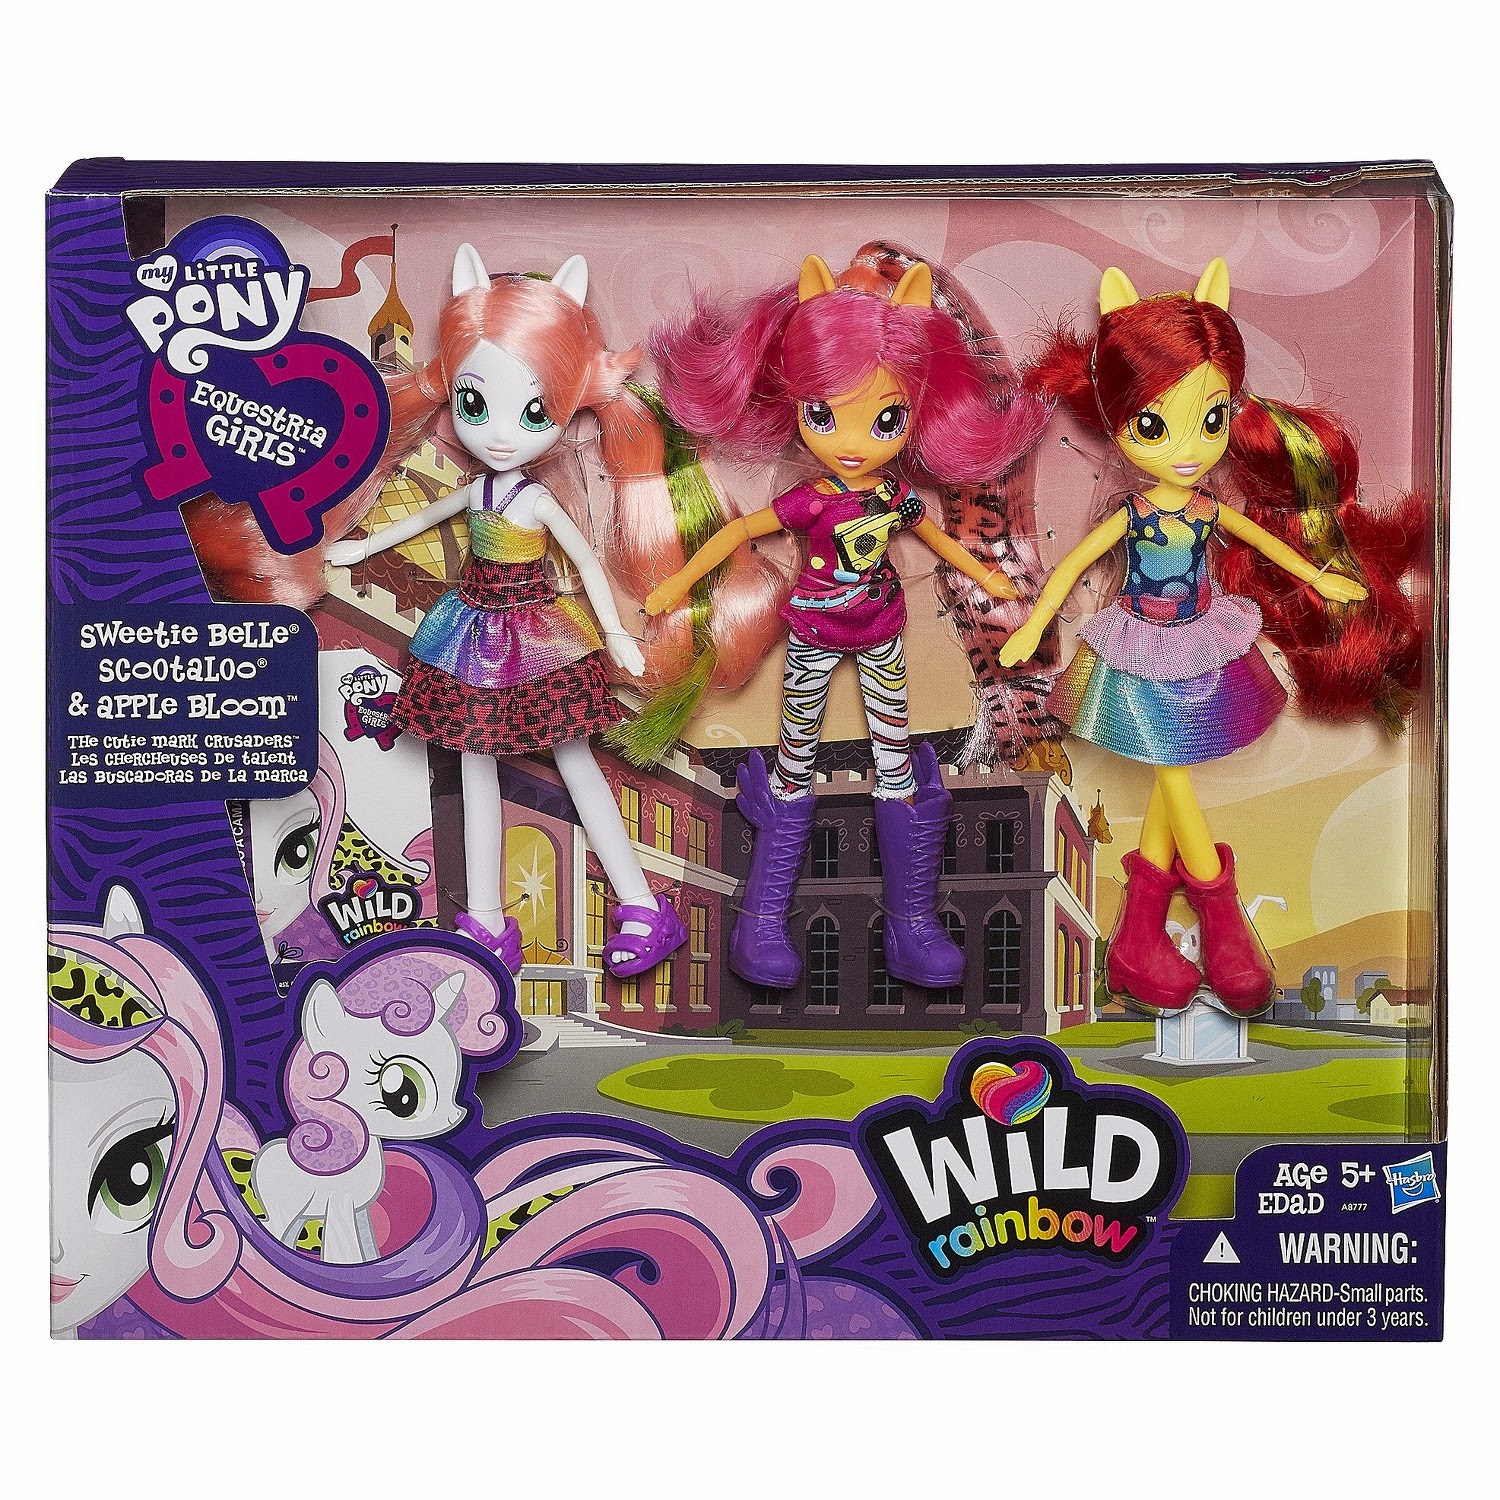 Cutie Mark Crusaders Wild Rainbow Equestria Girls